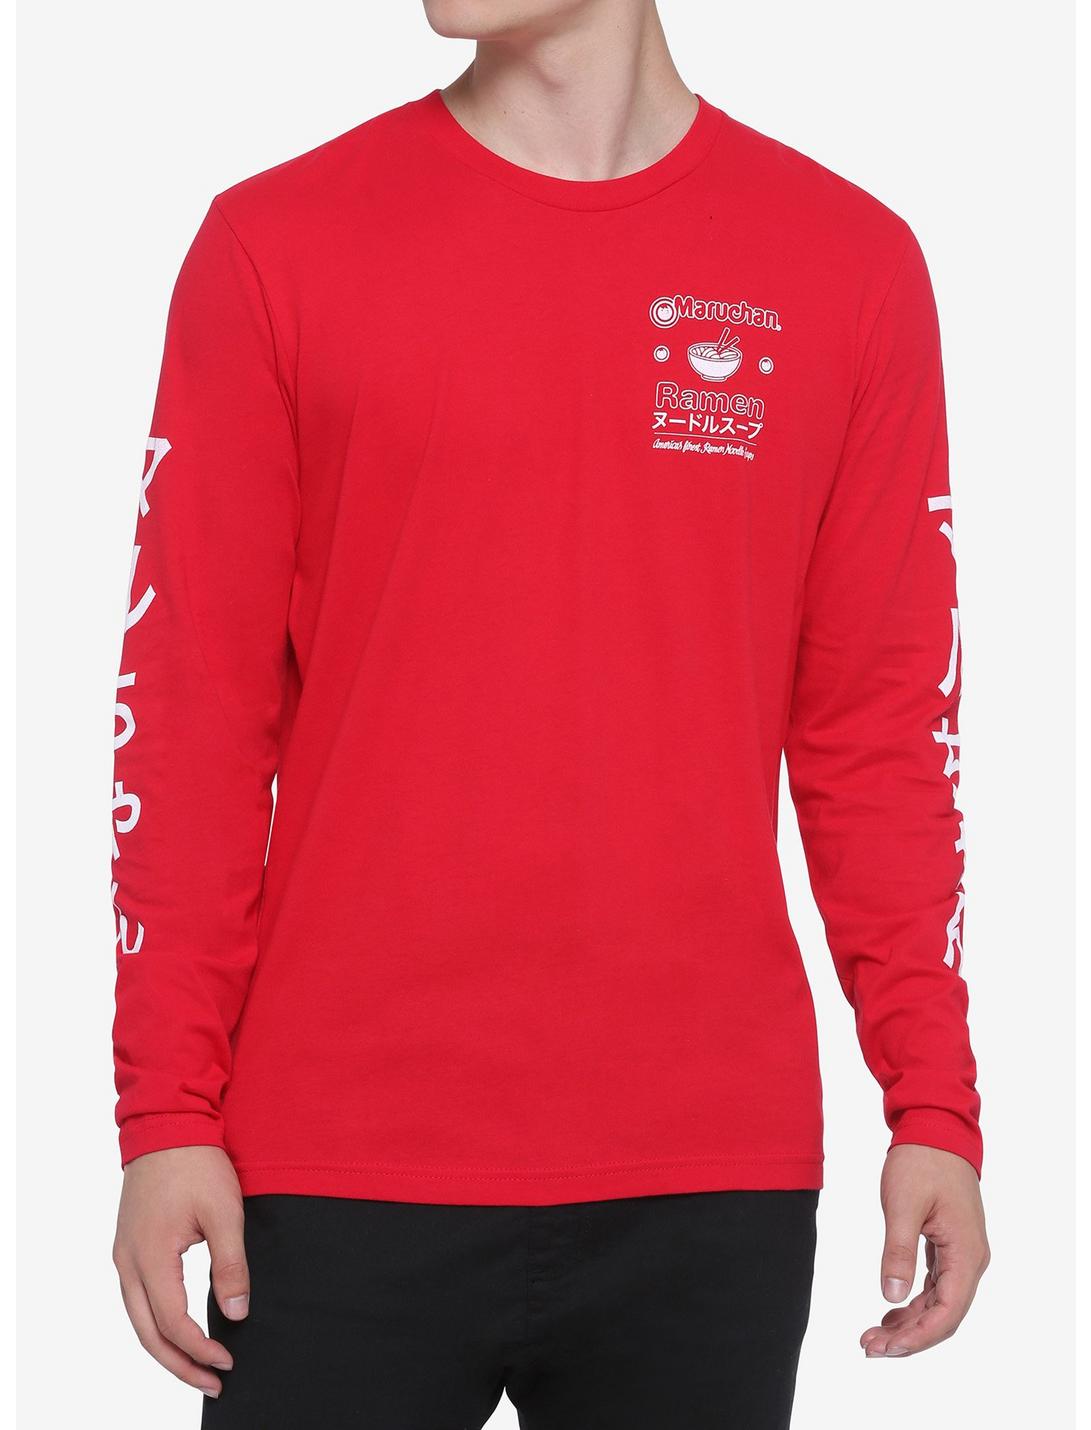 Maruchan Ramen Red Long-Sleeve T-Shirt, MULTI, hi-res